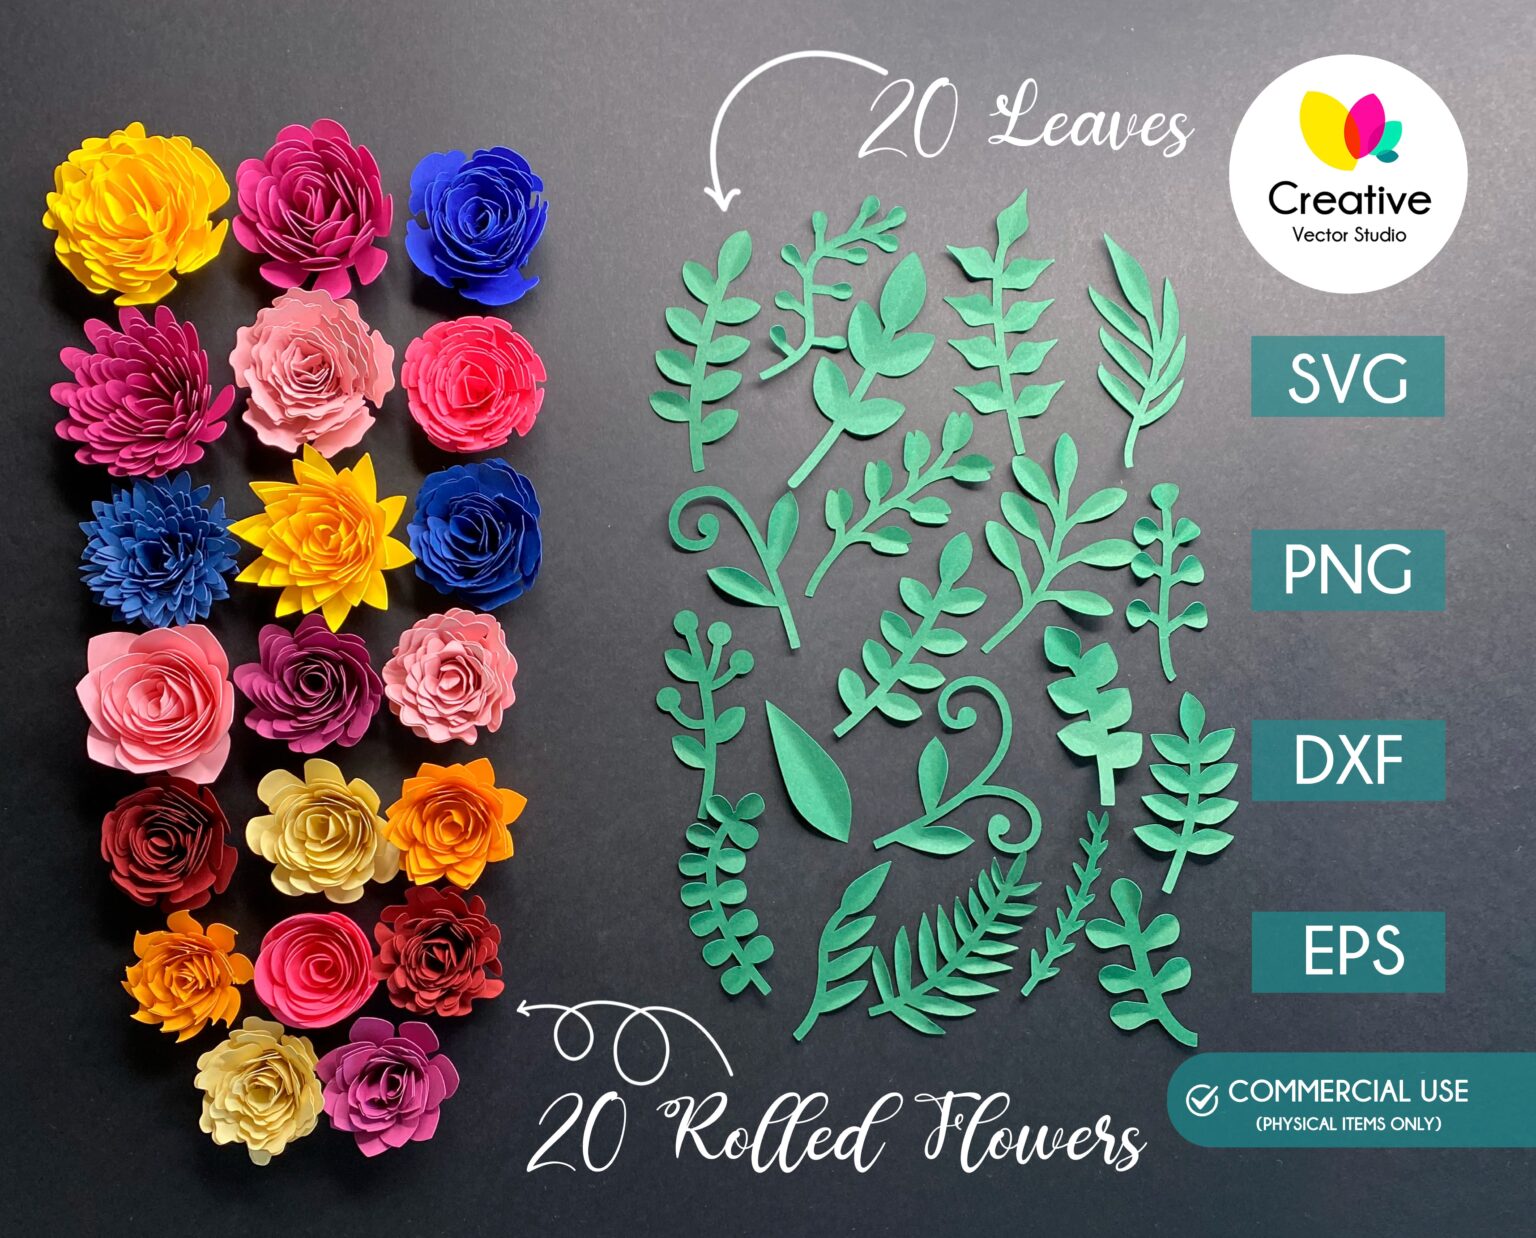 Rolled Flower and Leaves SVG Bundle | Creative Vector Studio